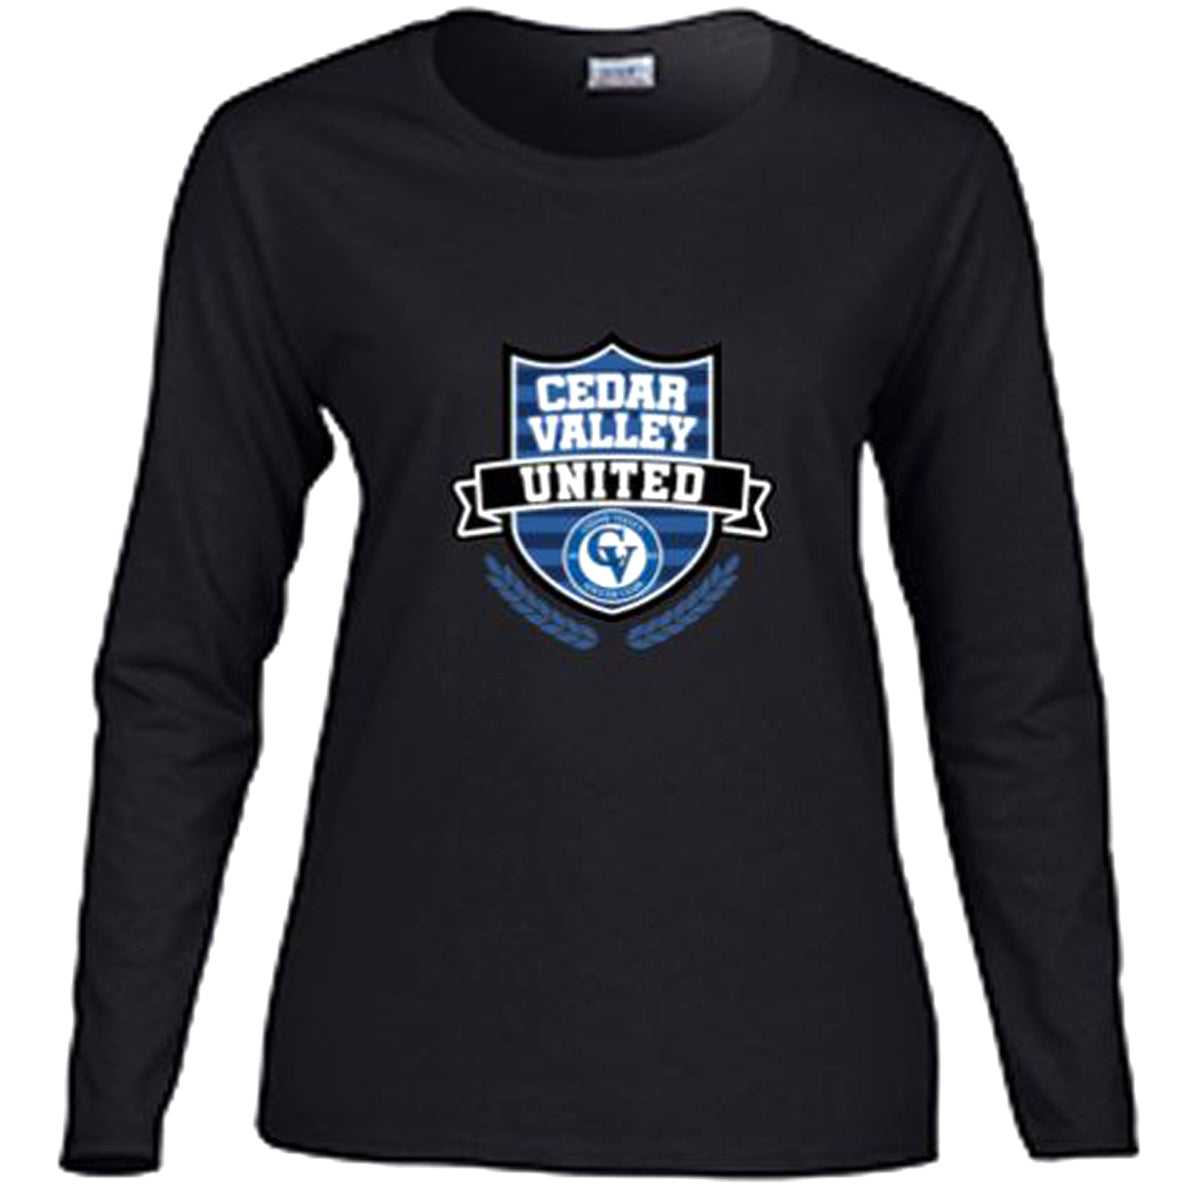 Cedar Valley Soccer Club Ladies' Heavy Cotton 5.3 Oz. Long-Sleeve T-Shirt Long Sleeve T-Shirt Gildan Ladies Small Black 